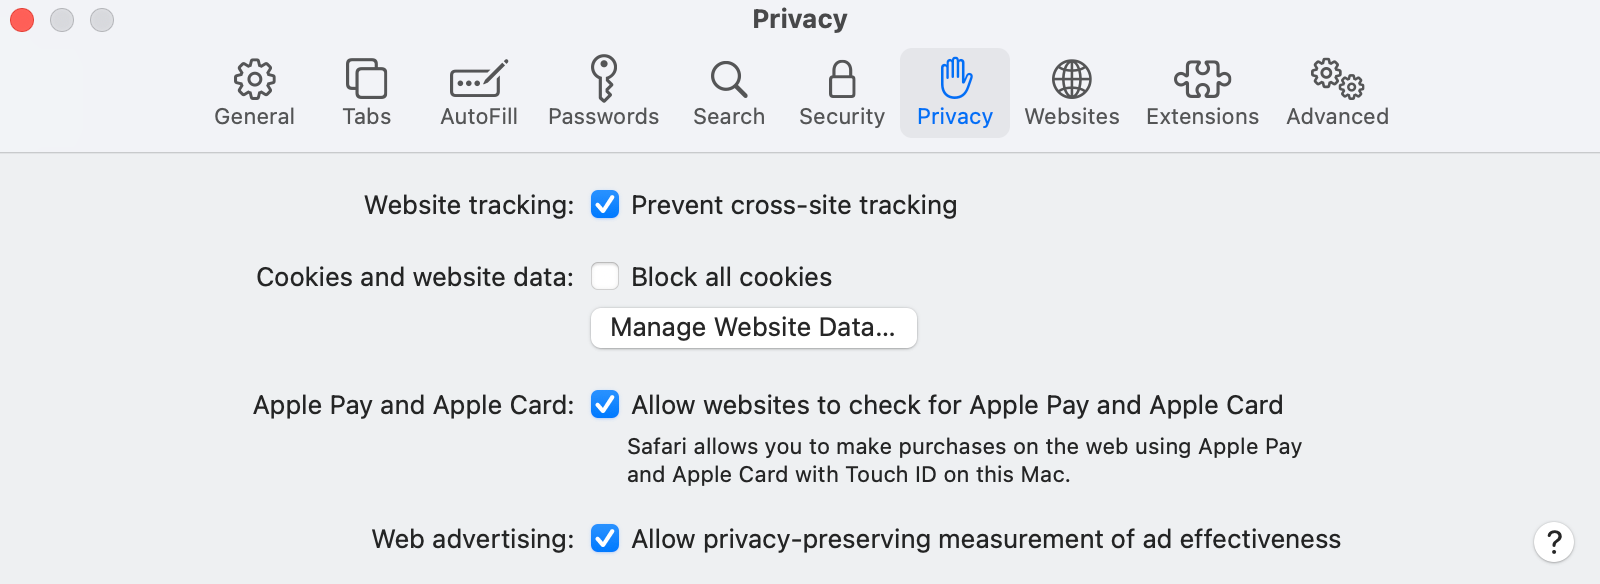 A screenshot of the Apple Safari web browser showing the Privacy settings menu